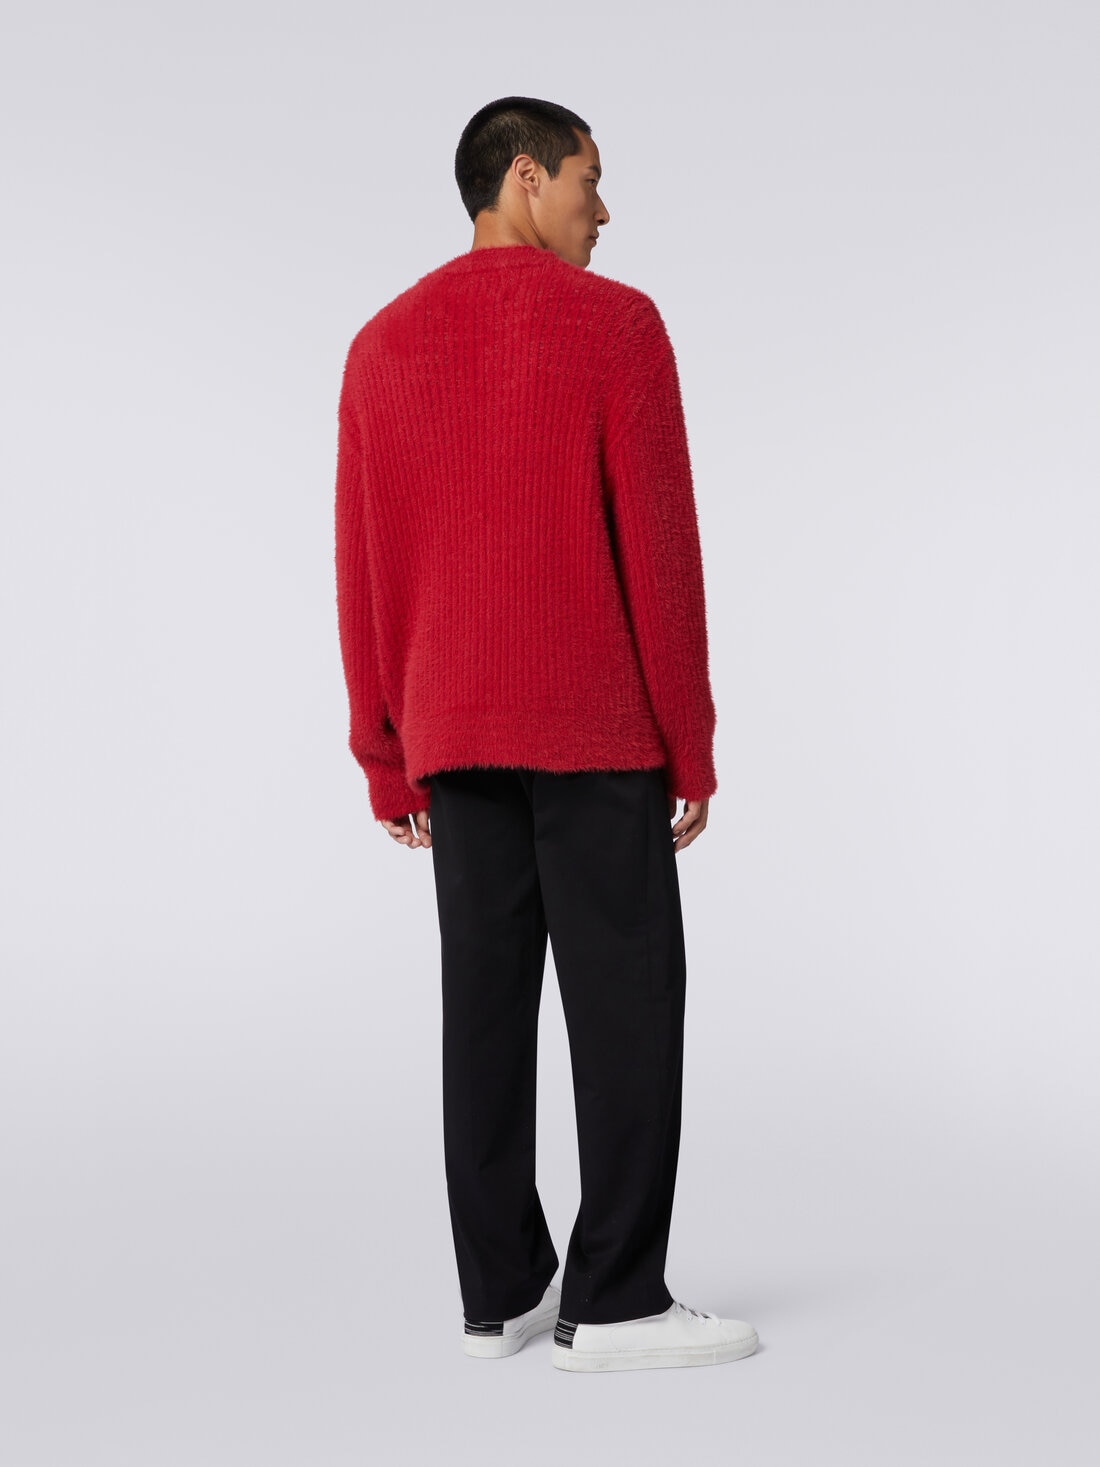 Oversized cardigan in fur-effect wool blend, Red  - US24SM0LBK026I91559 - 3